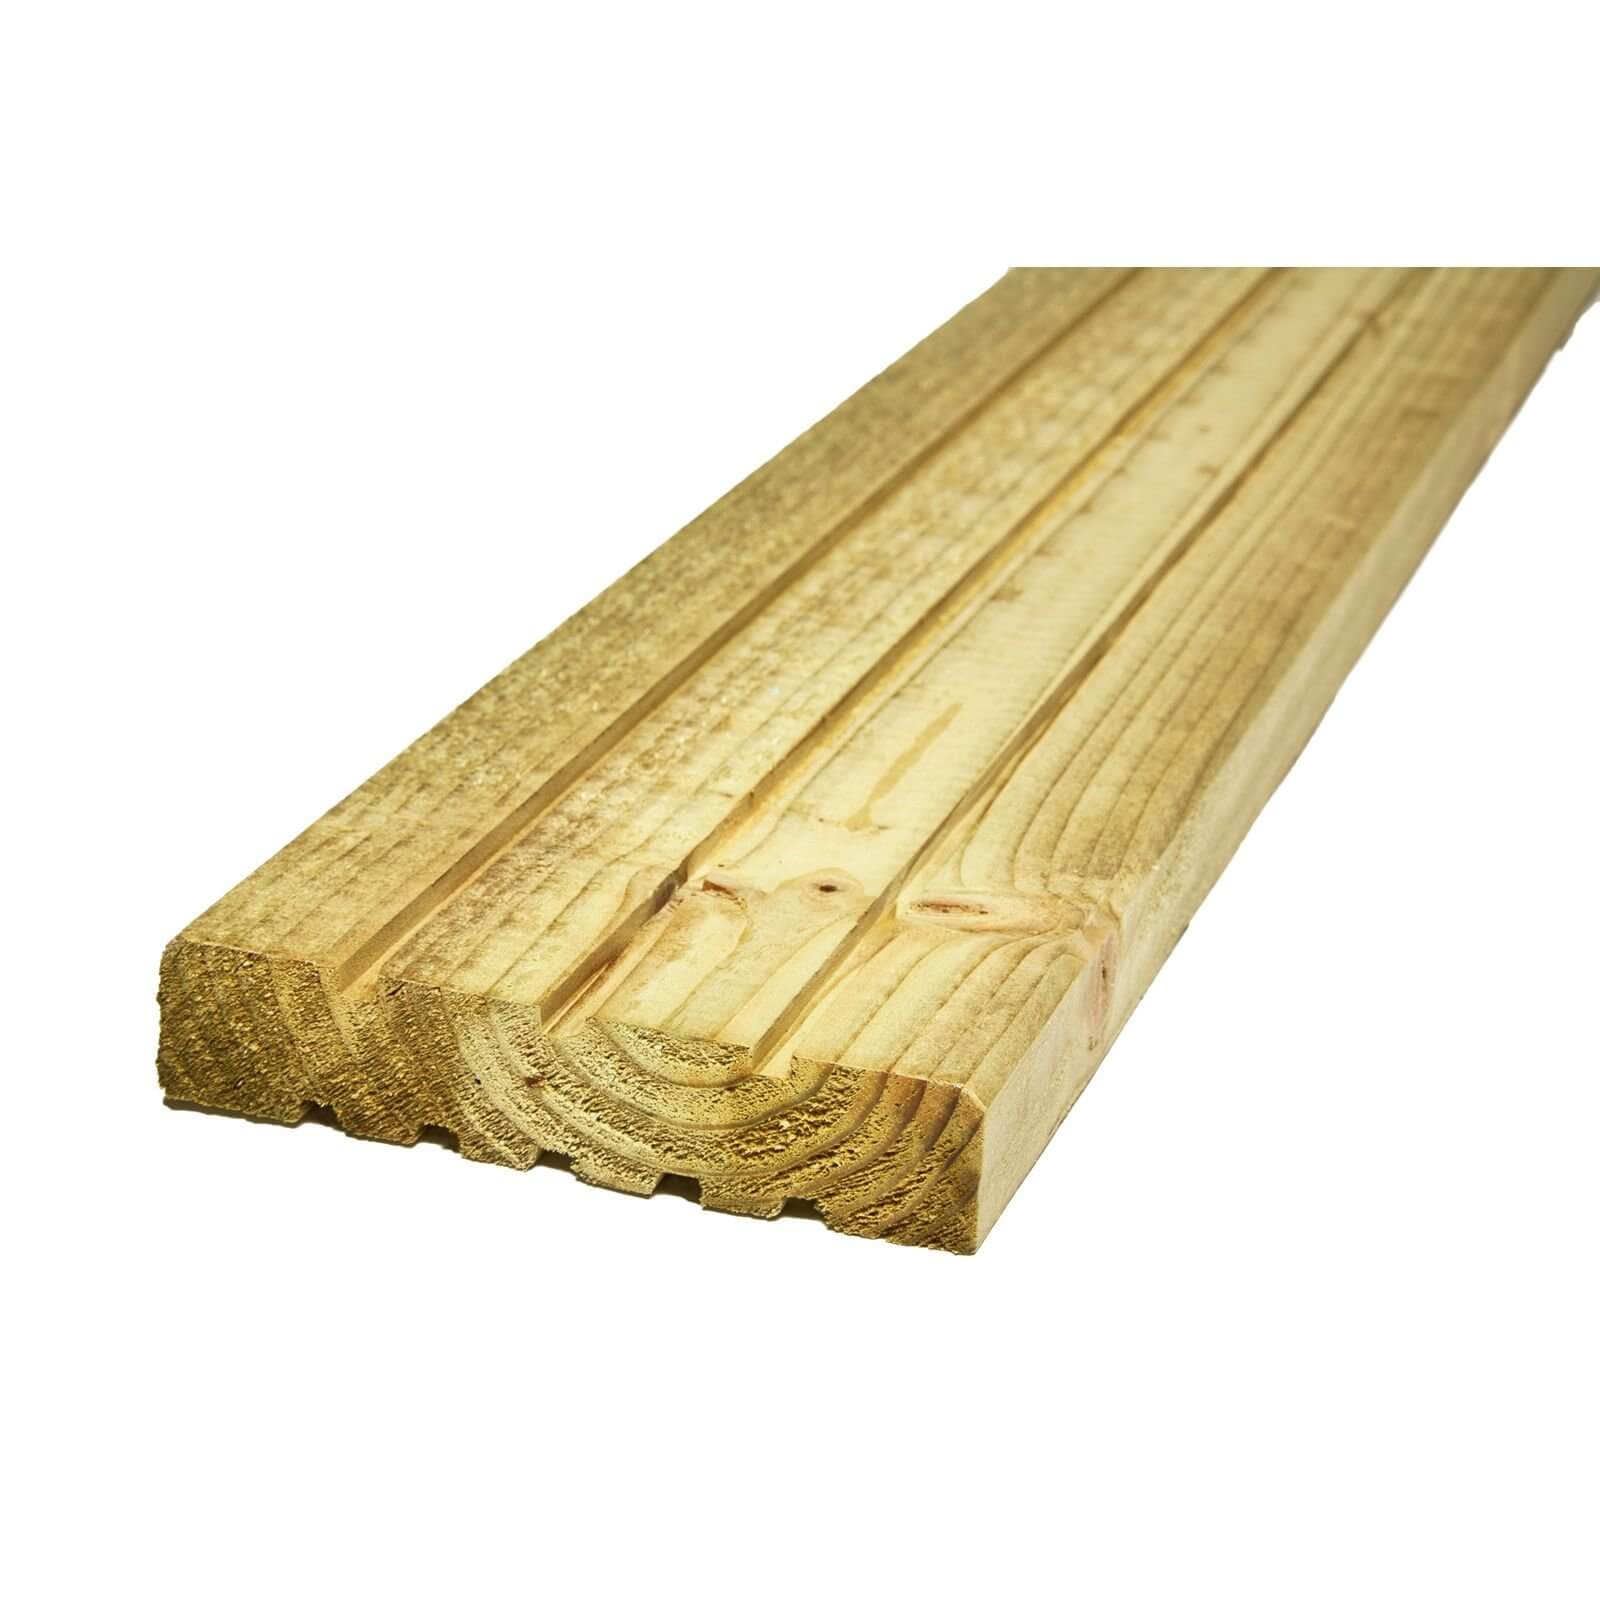 Metsa Wood Deck Board 2.4m (25 x 120 x 2400mm)